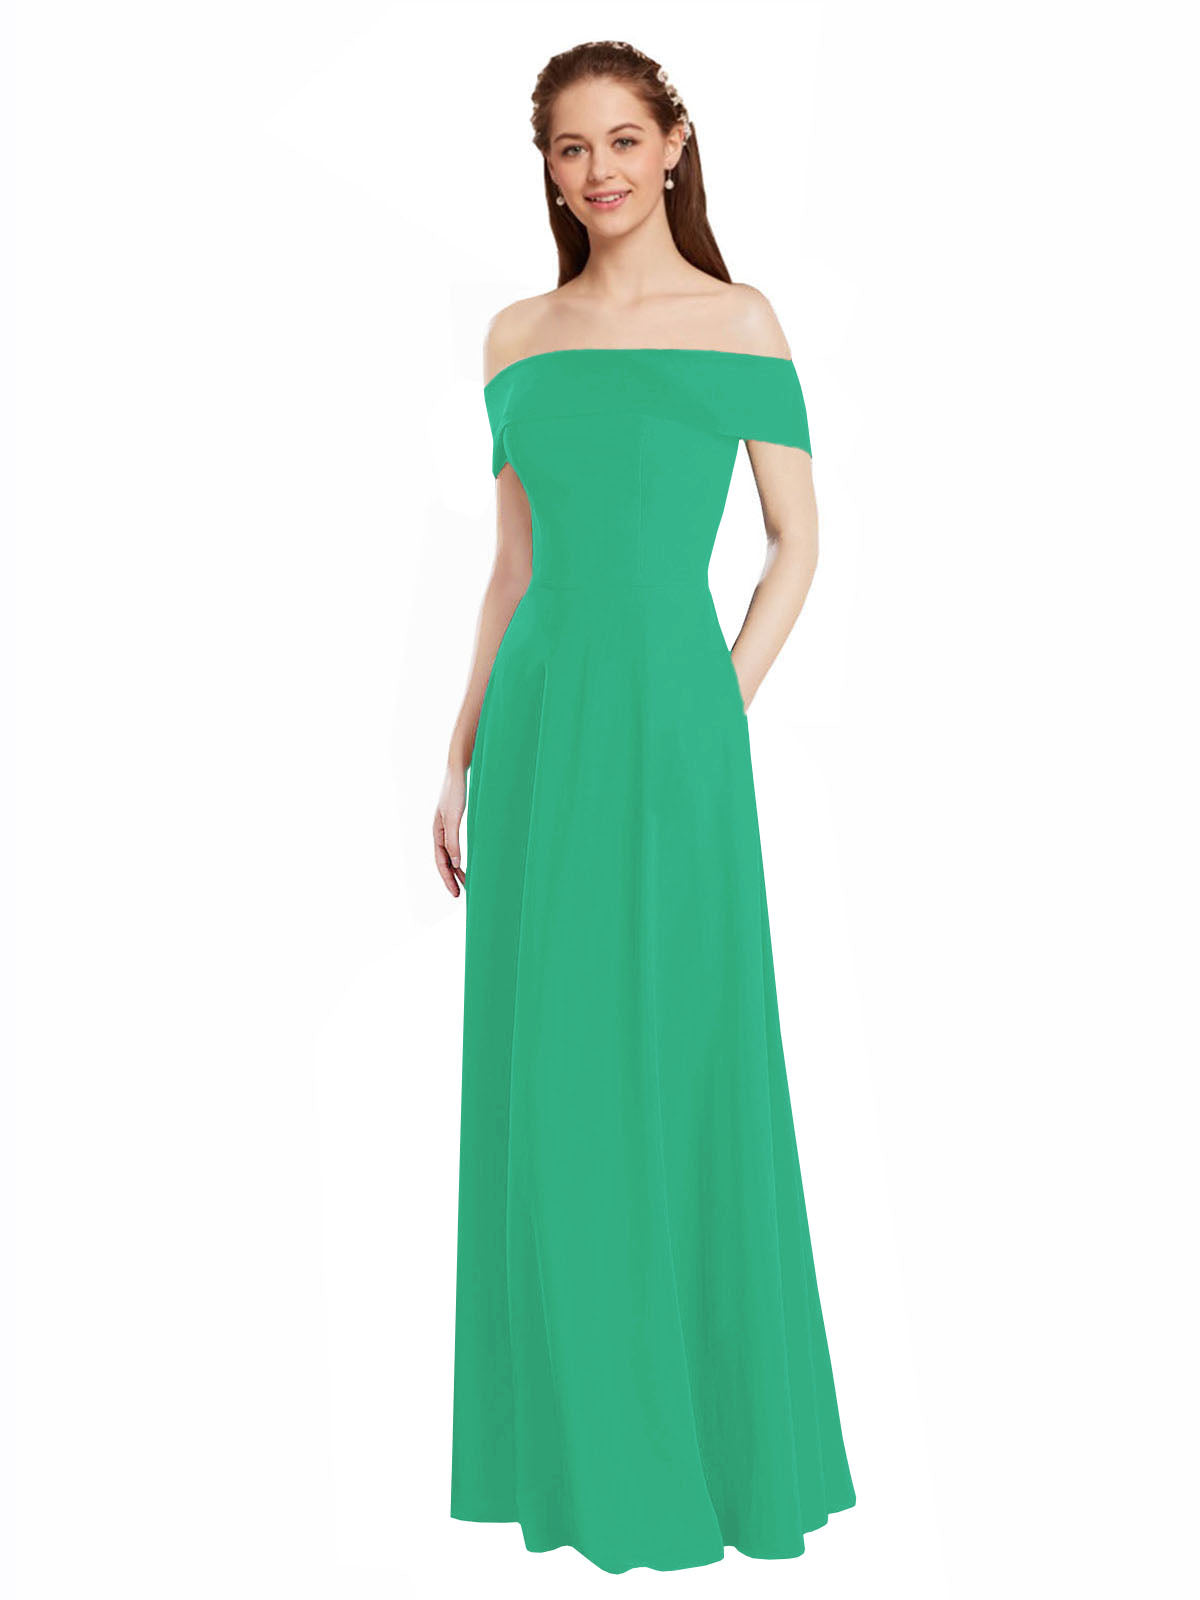 Emerald Green A-Line Off the Shoulder Cap Sleeves Long Bridesmaid Dress Lina